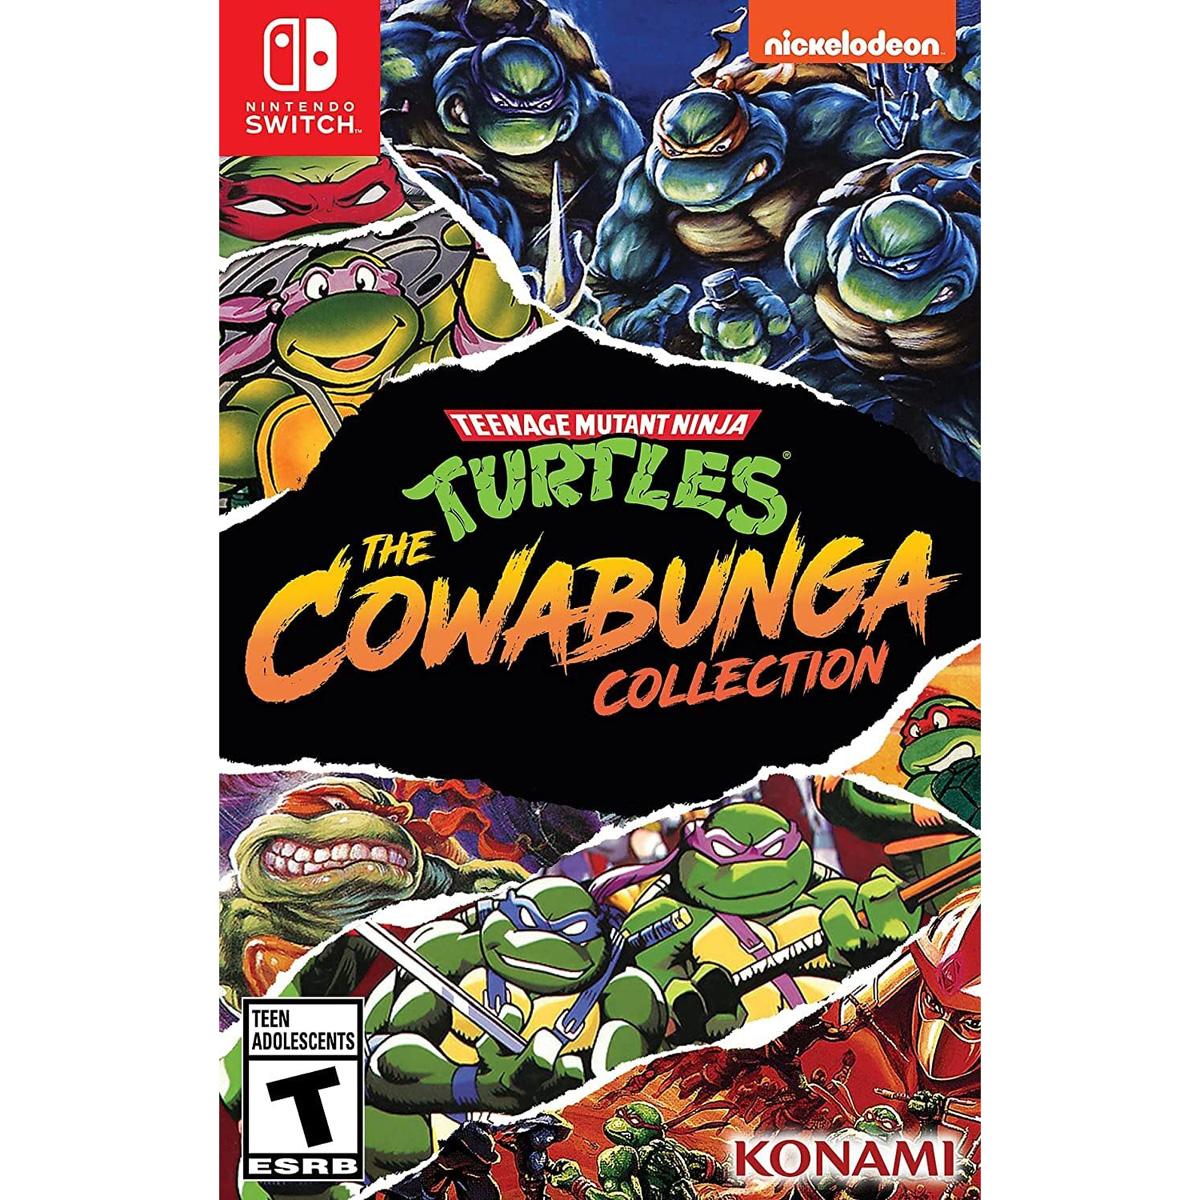 Teenage Mutant Ninja Turtles Cowabunga Collection TMNT Switch for $19.99